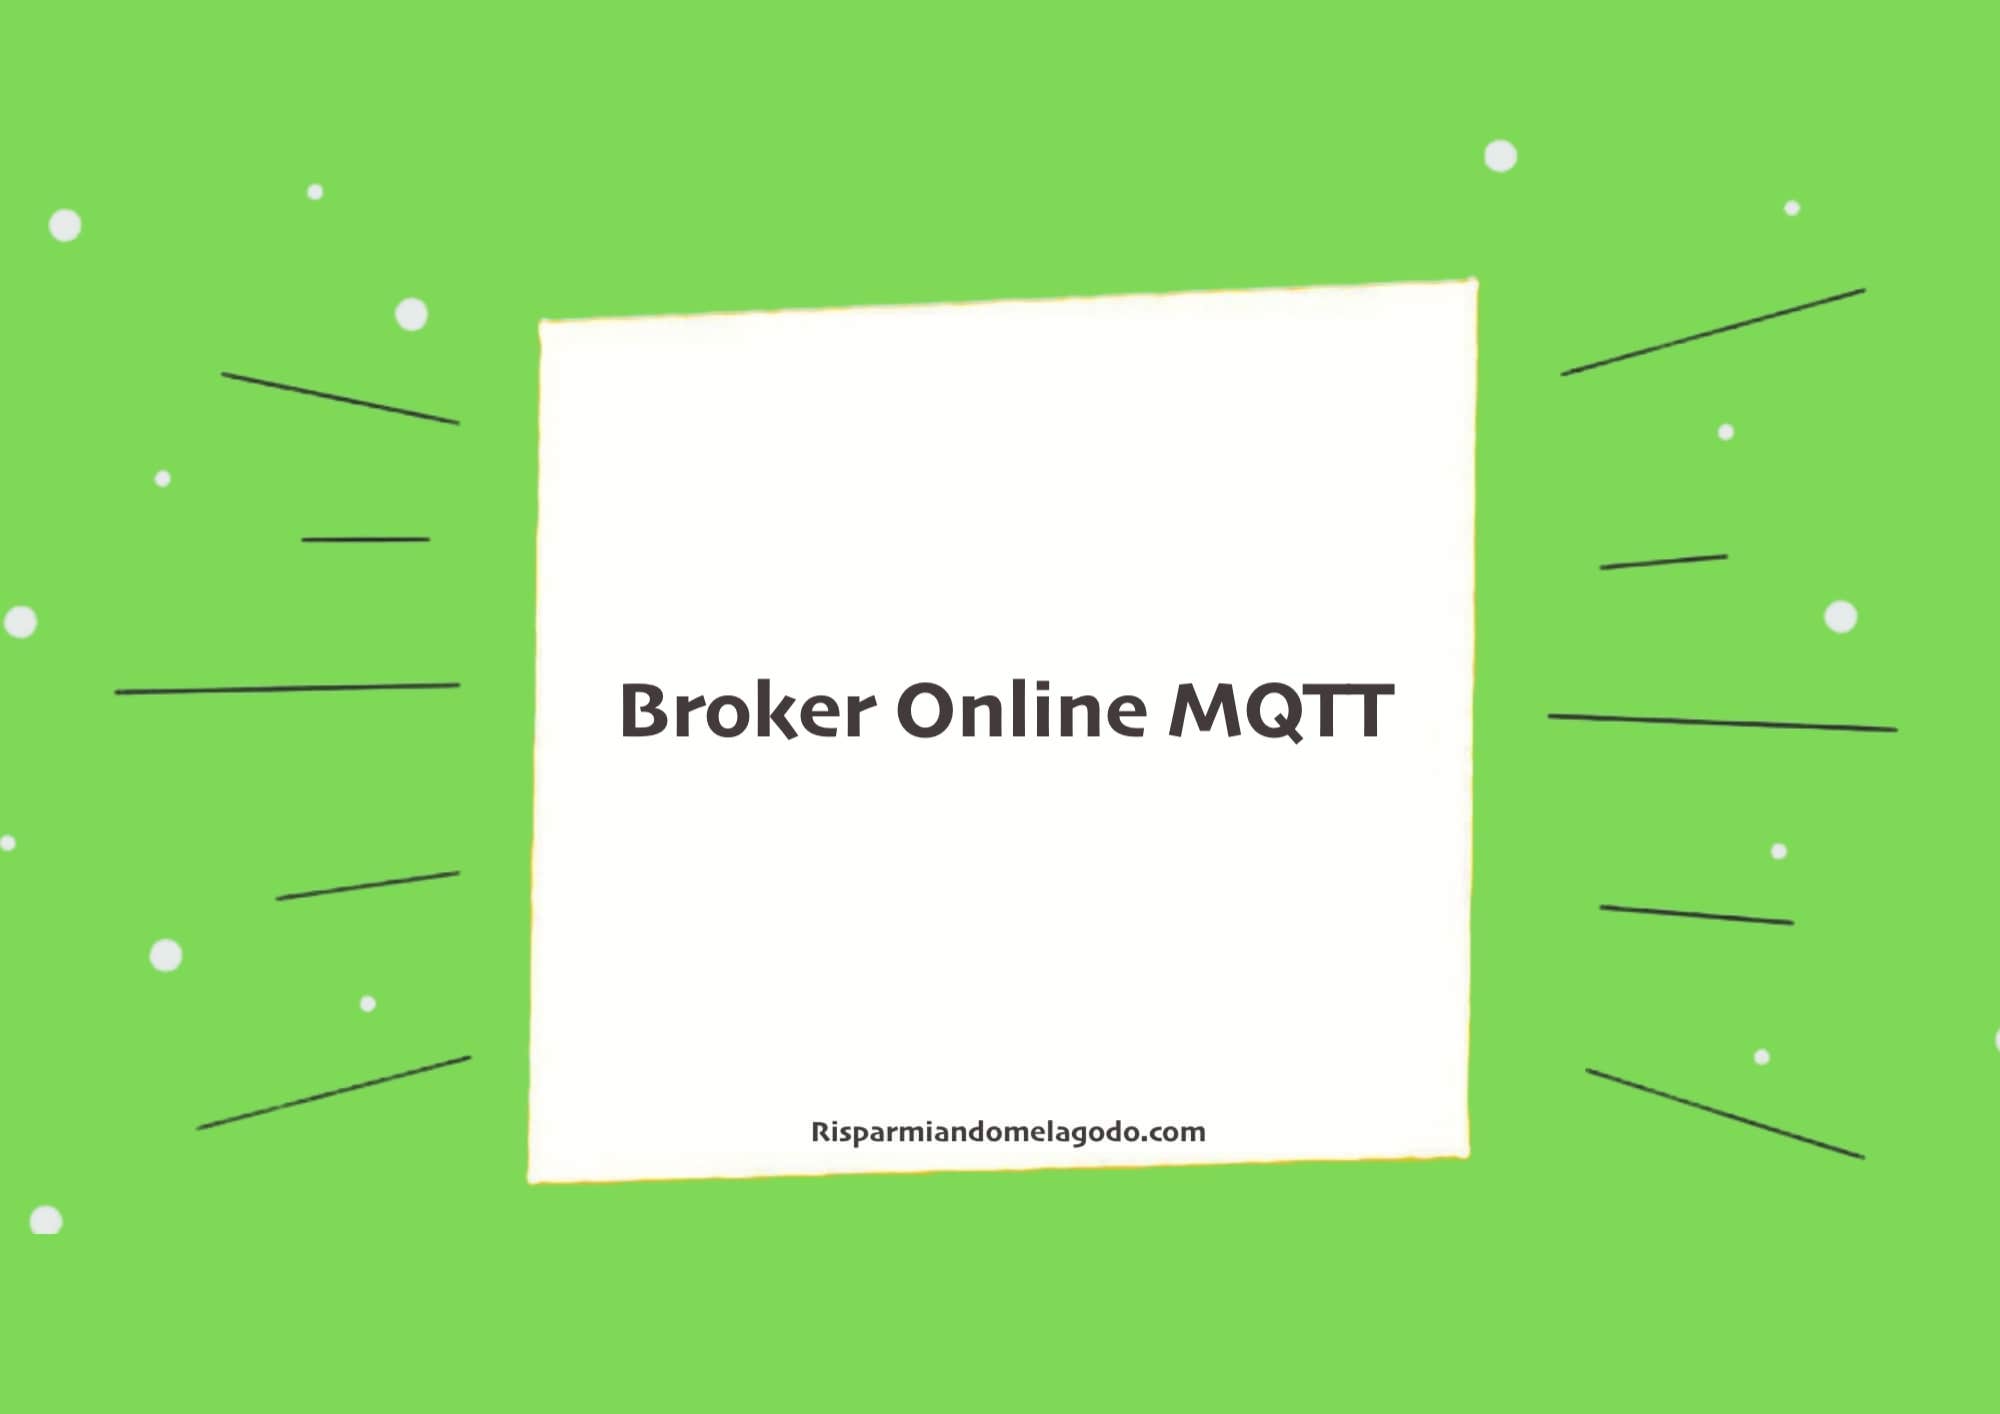 Broker Online MQTT